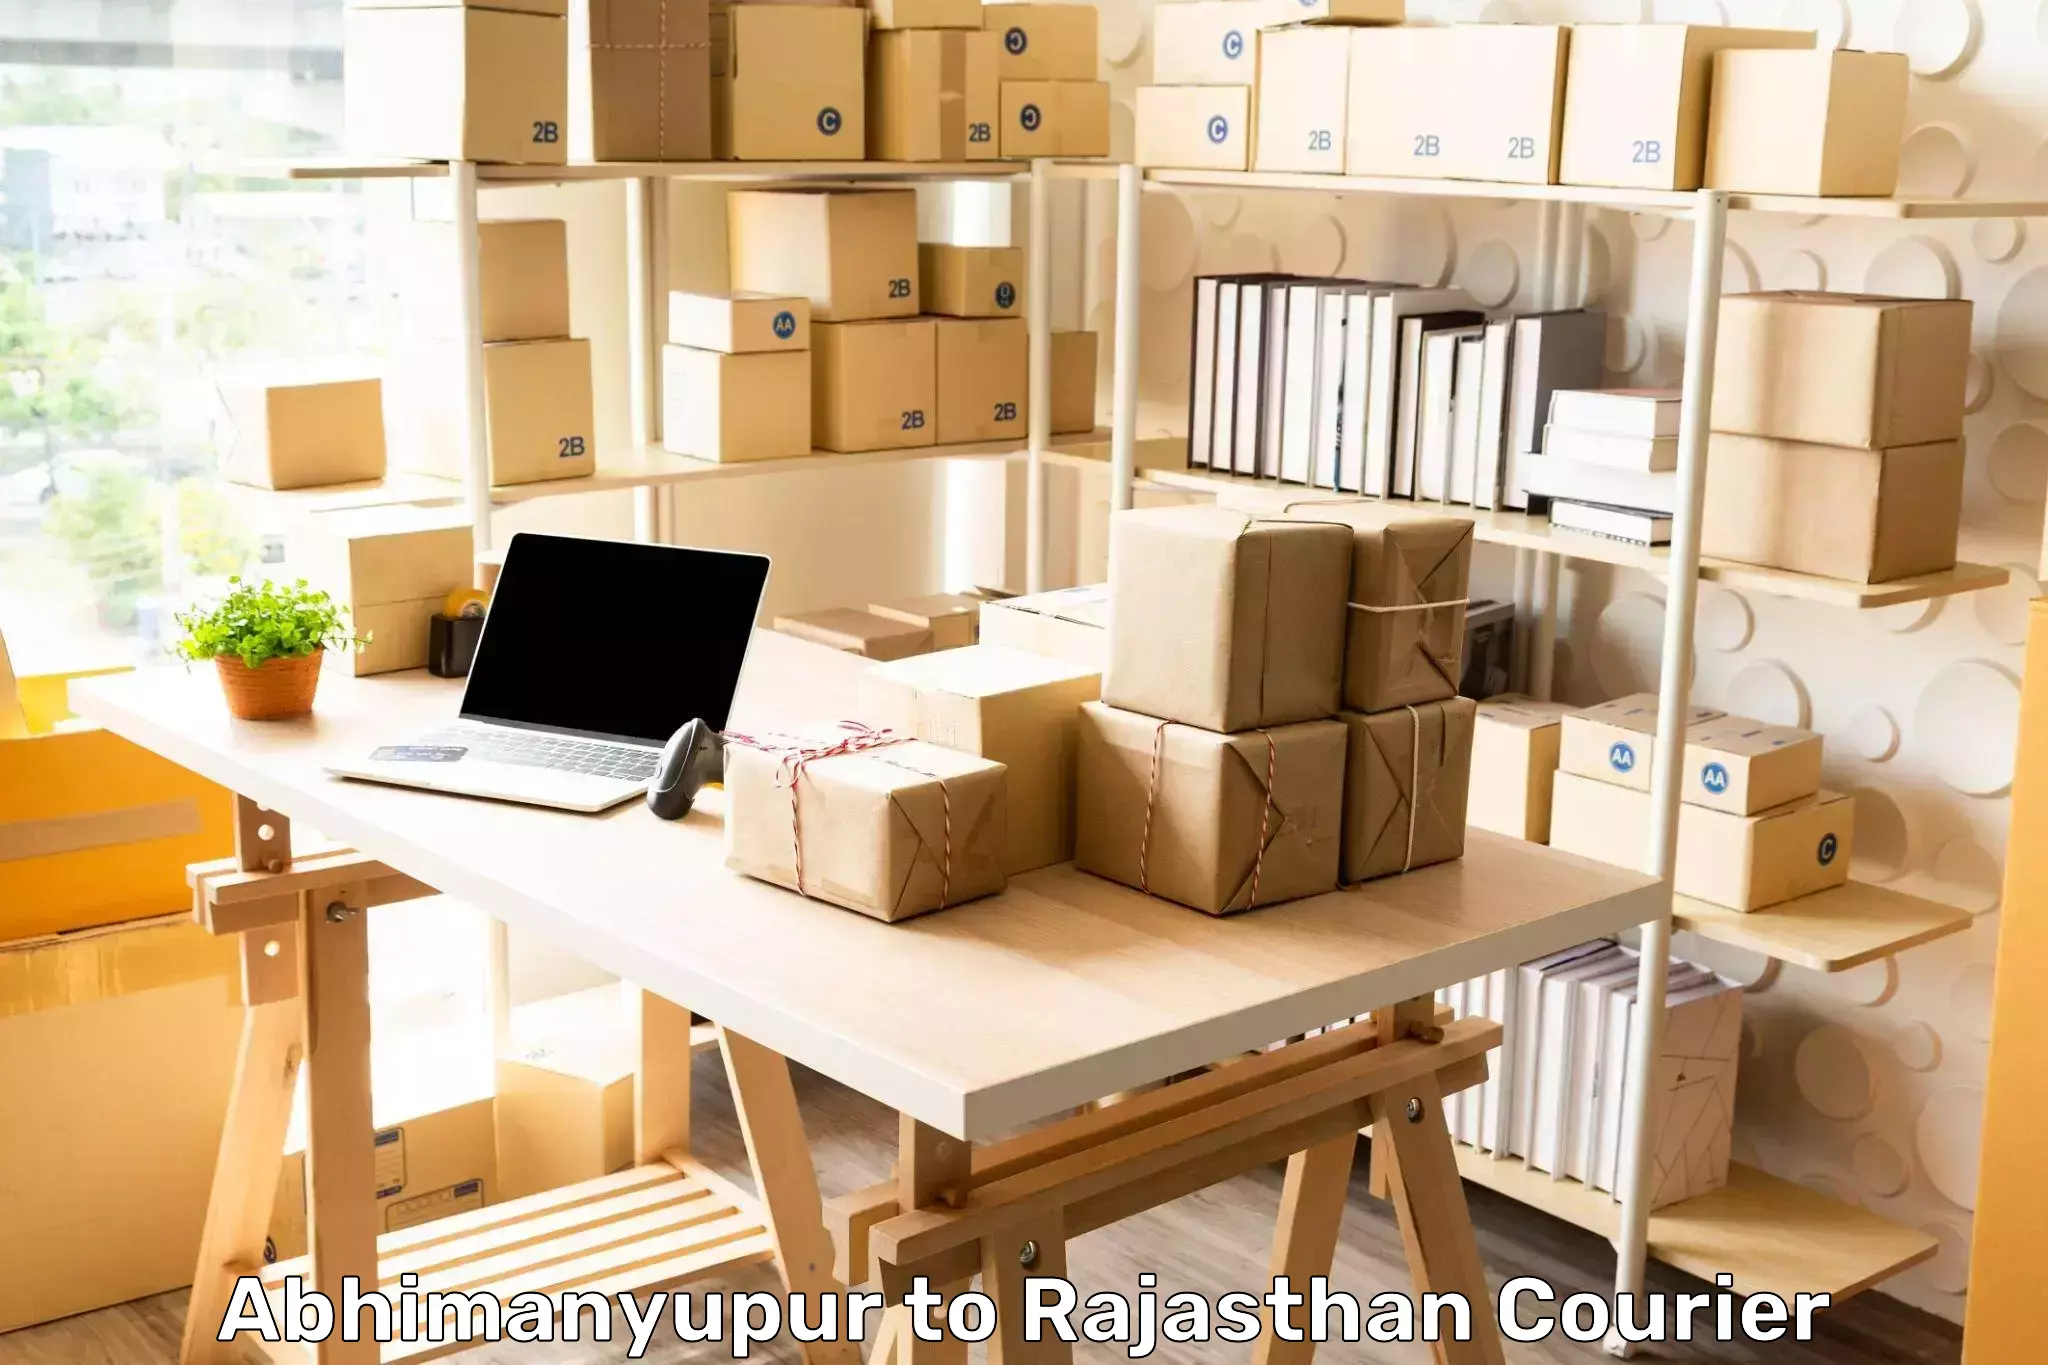 Multi-city courier Abhimanyupur to Achrol